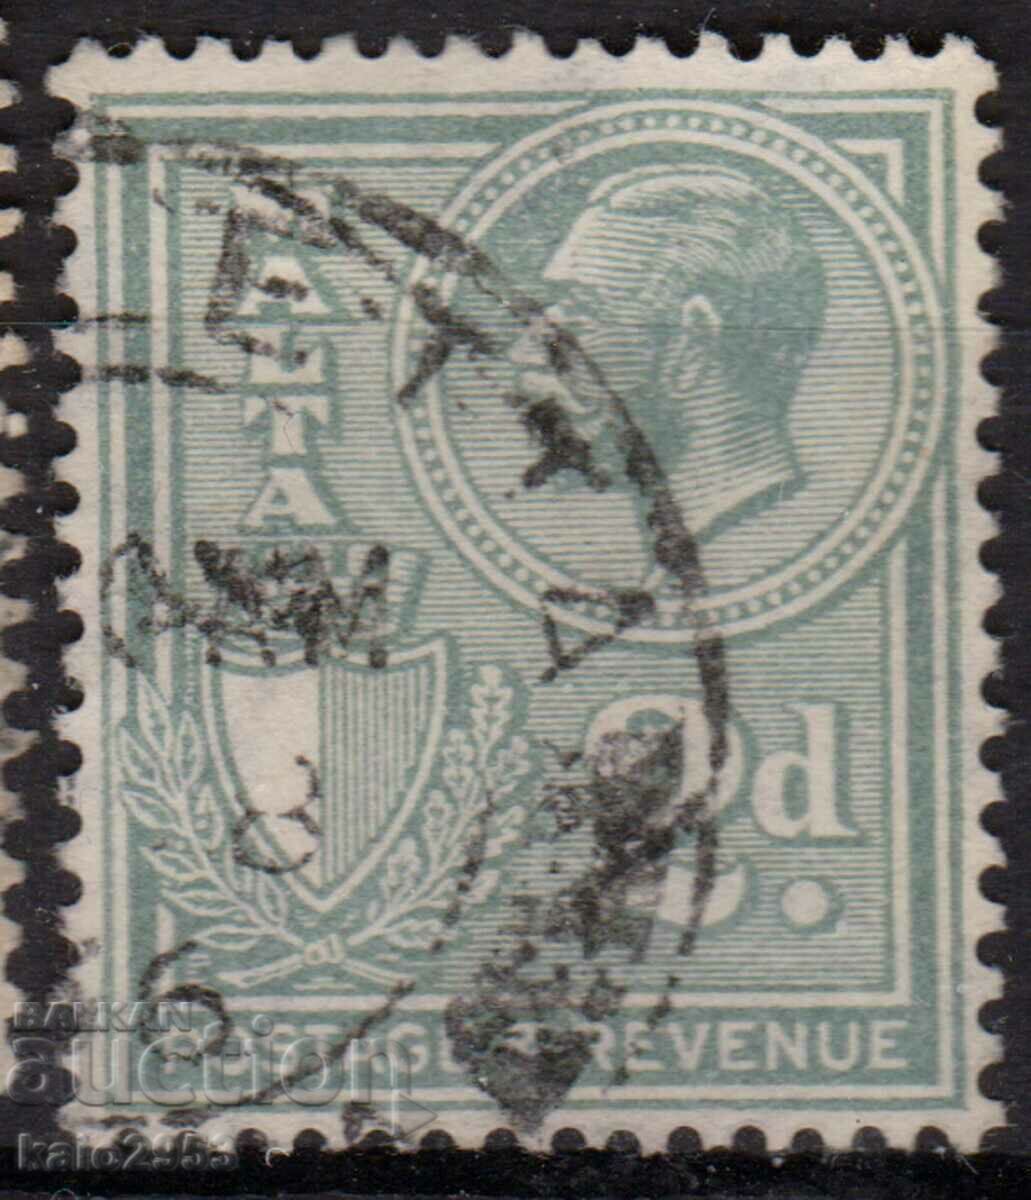 GB/Malta-1930-Regular-KE V+ștampila-„Poștale/Venituri”, ștampilă